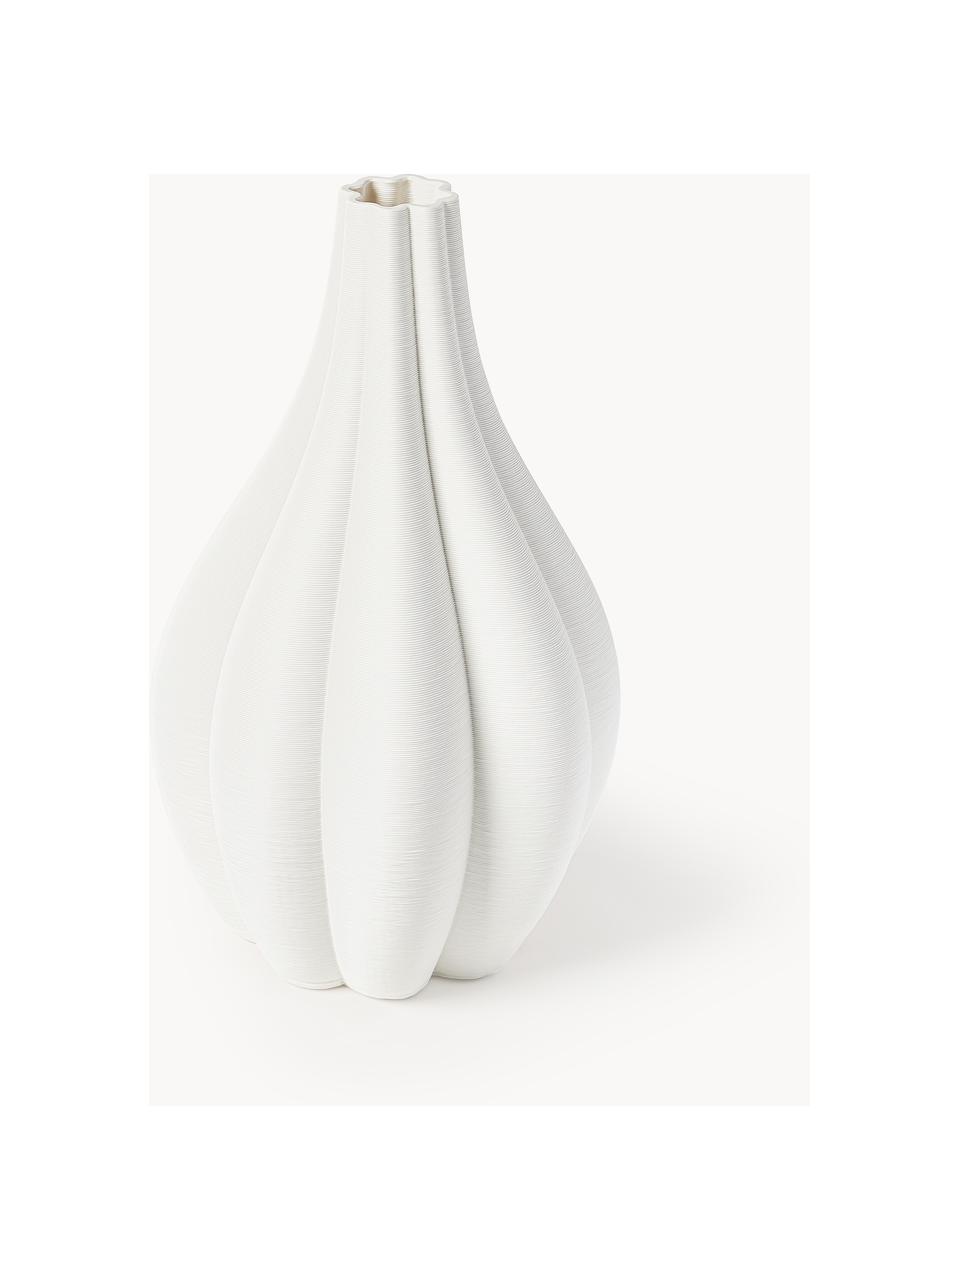 Grote 3D-geprinte Melody vaas van porselein, H 40 cm, Porselein, Wit, Ø 23 x H 40 cm